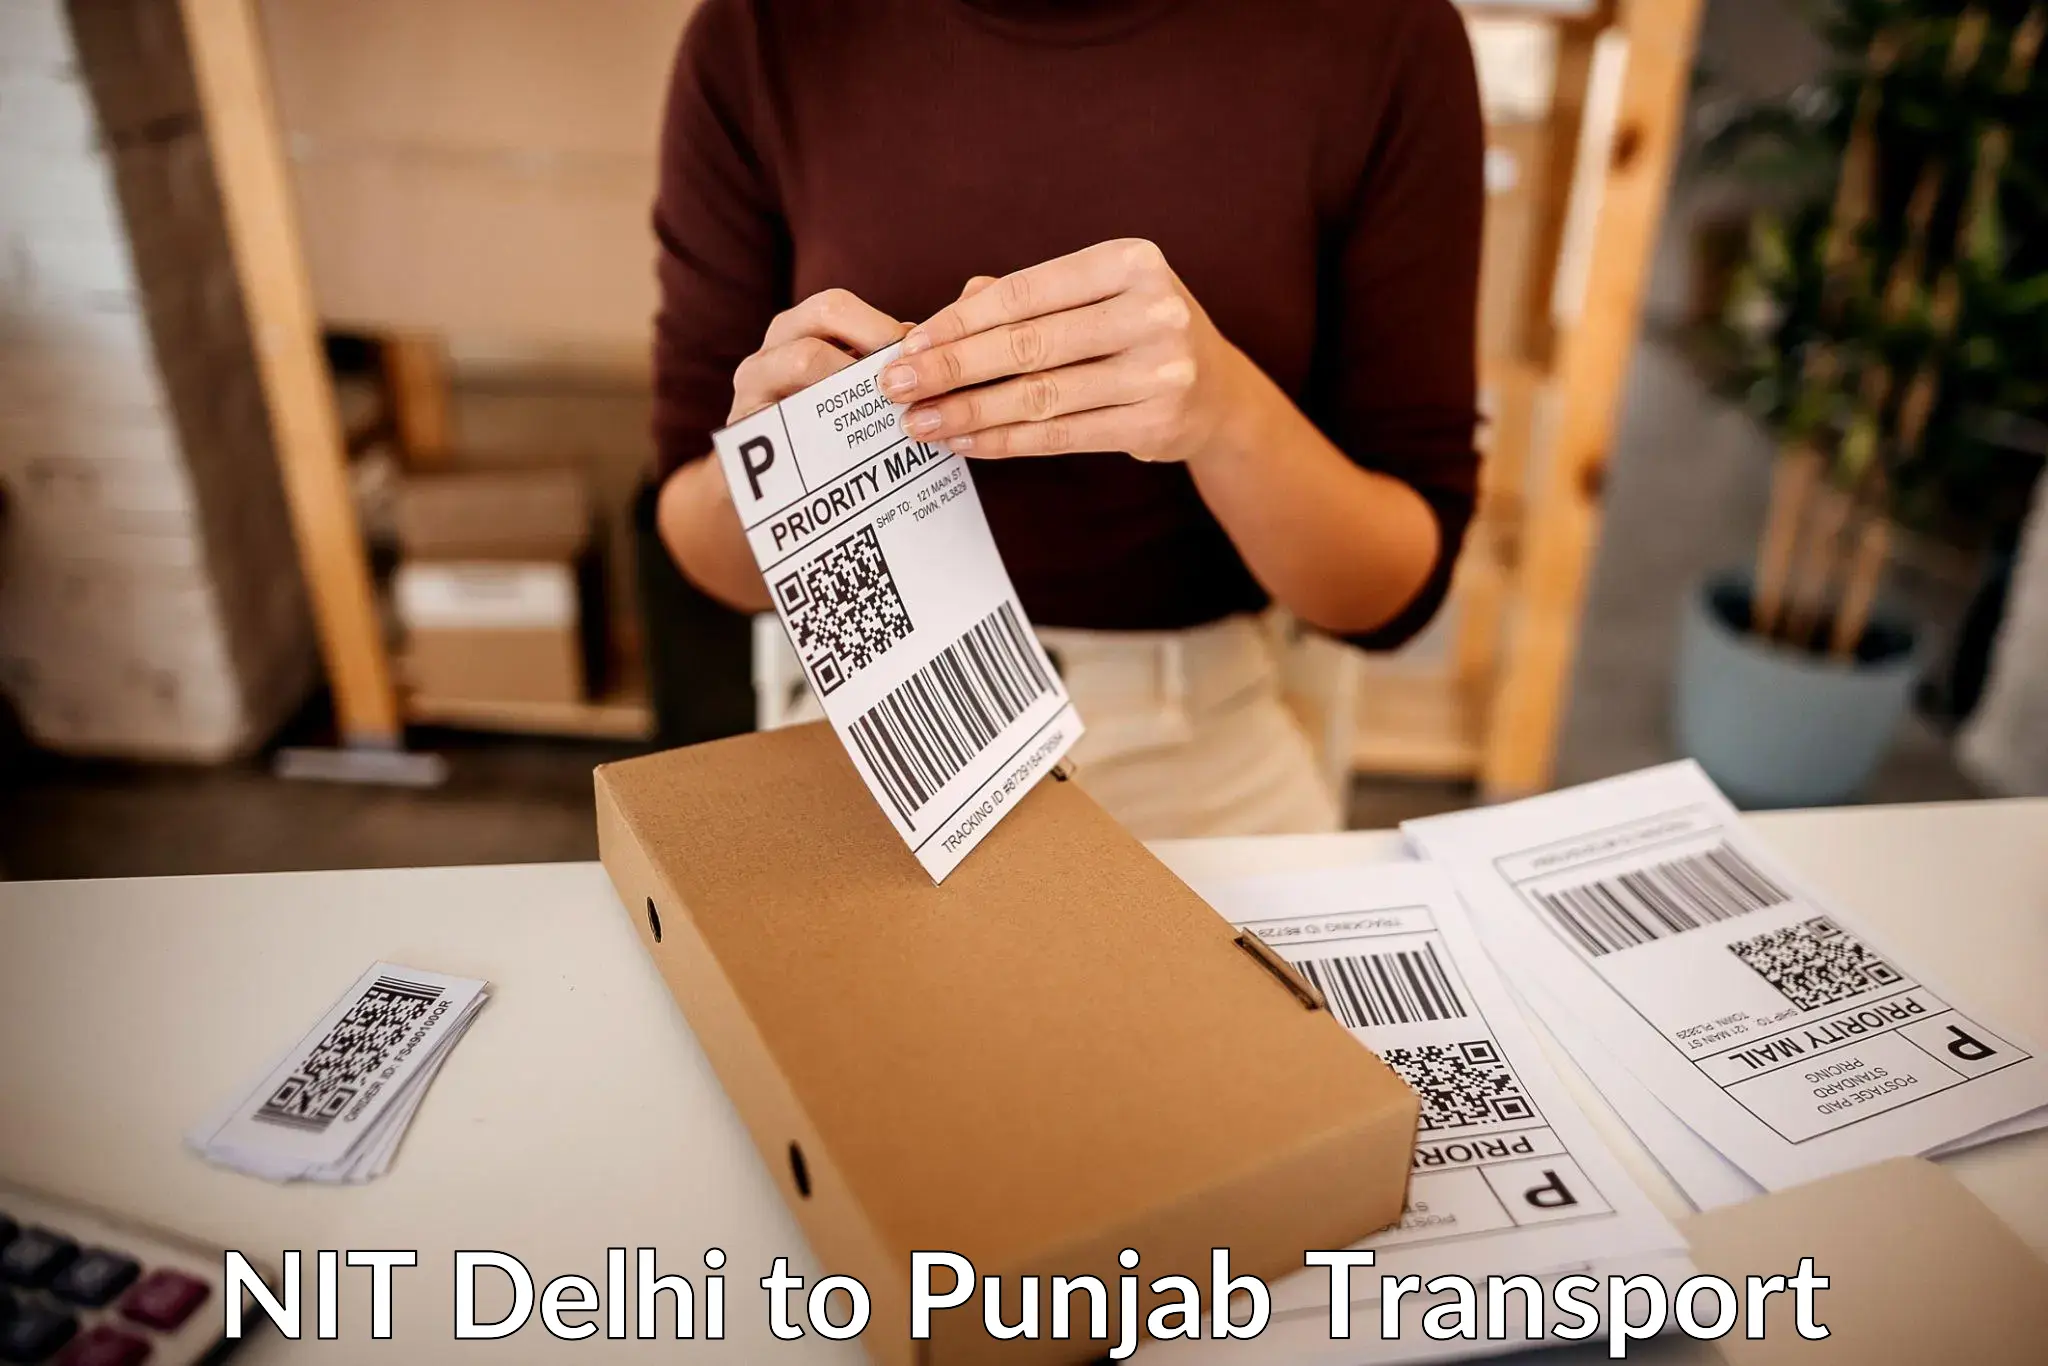 Online transport service NIT Delhi to Ludhiana